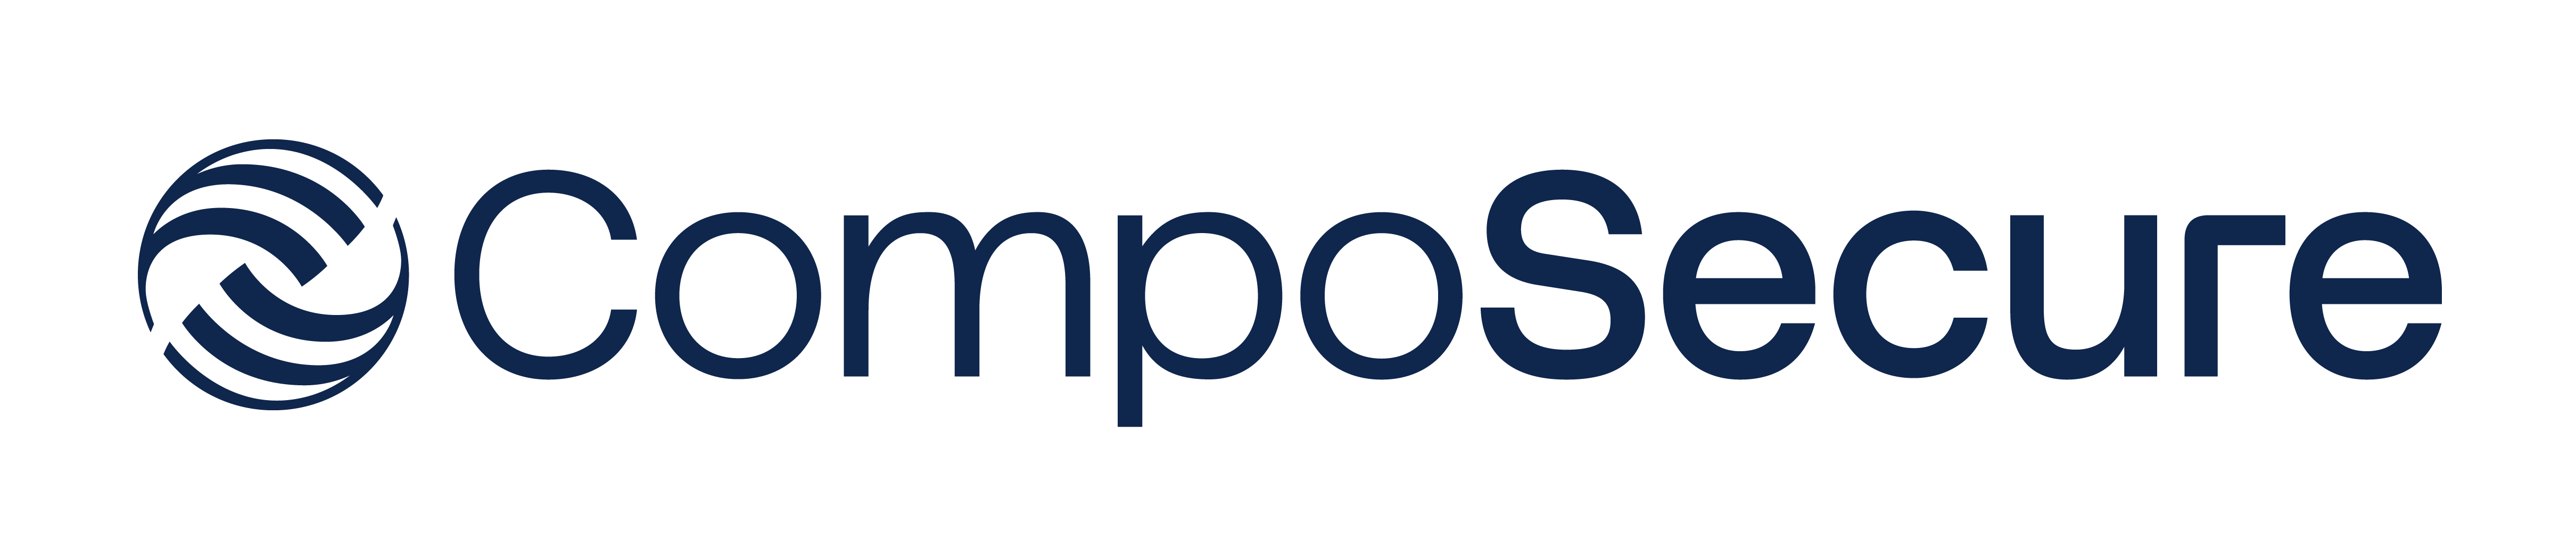 CompoSecure L.L.C. Company Logo